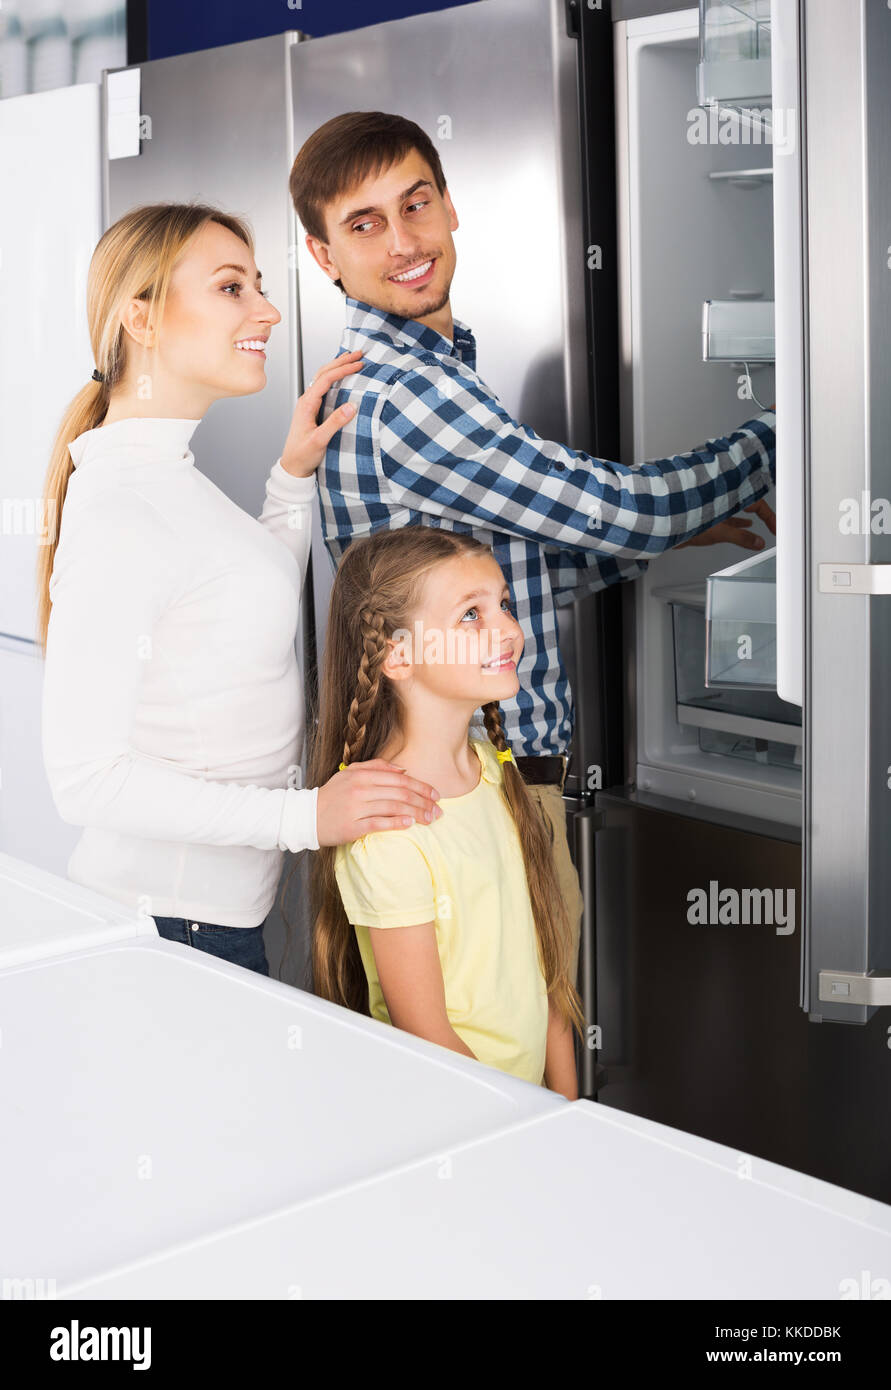 https://c8.alamy.com/comp/KKDDBK/happy-family-selecting-refrigerator-in-appliance-store-KKDDBK.jpg